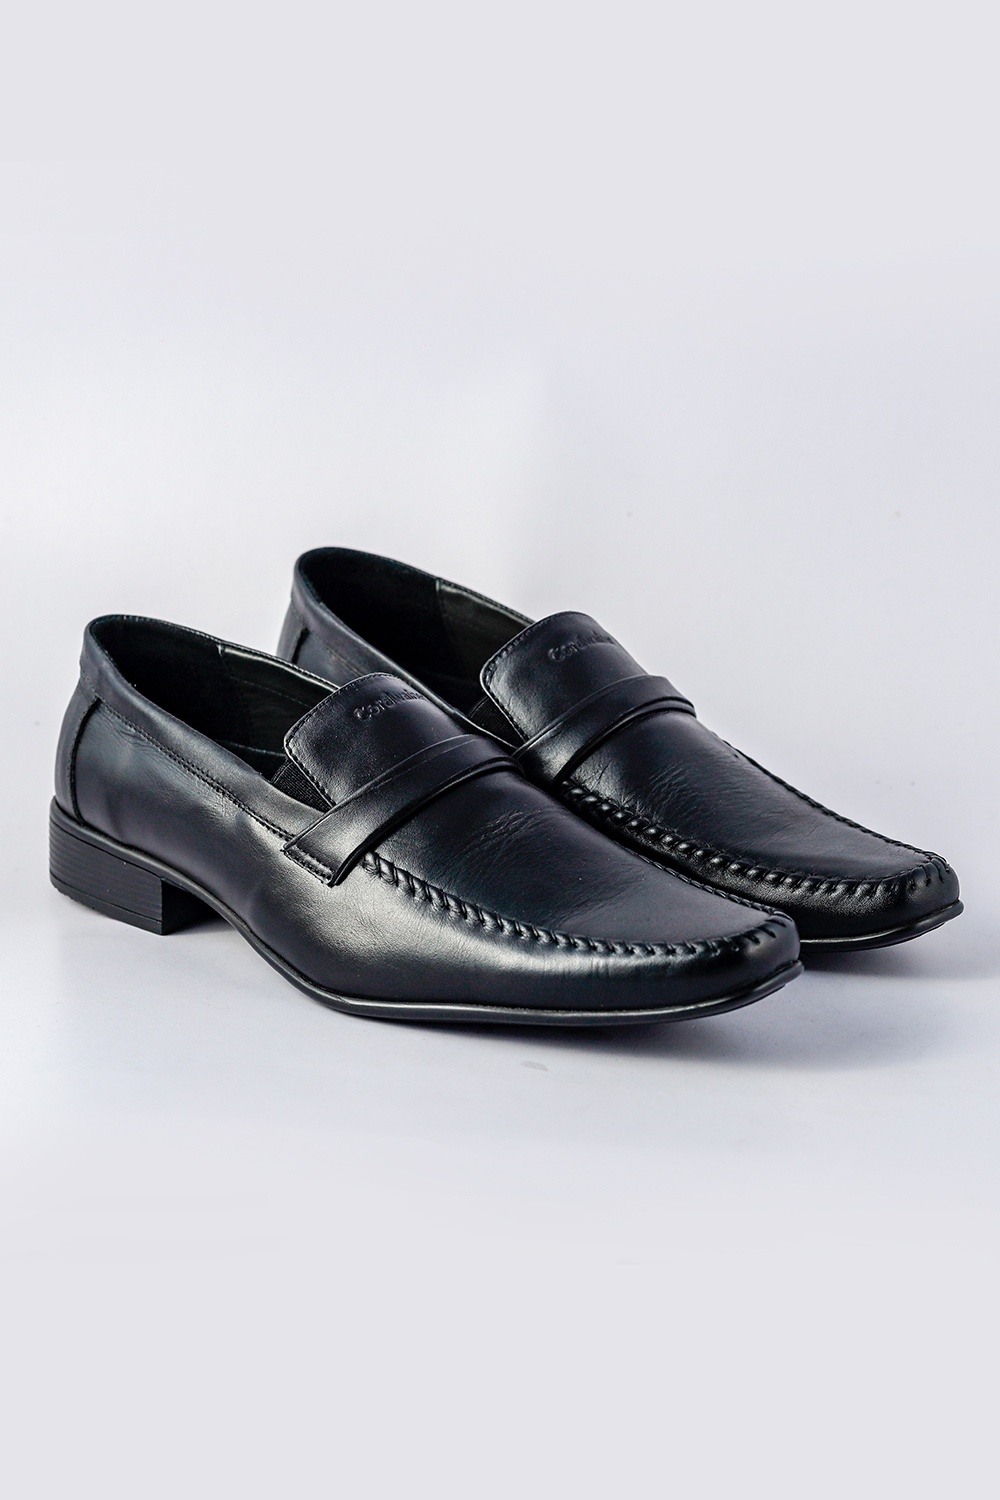 Cordwainer Shoes | Odel.lk